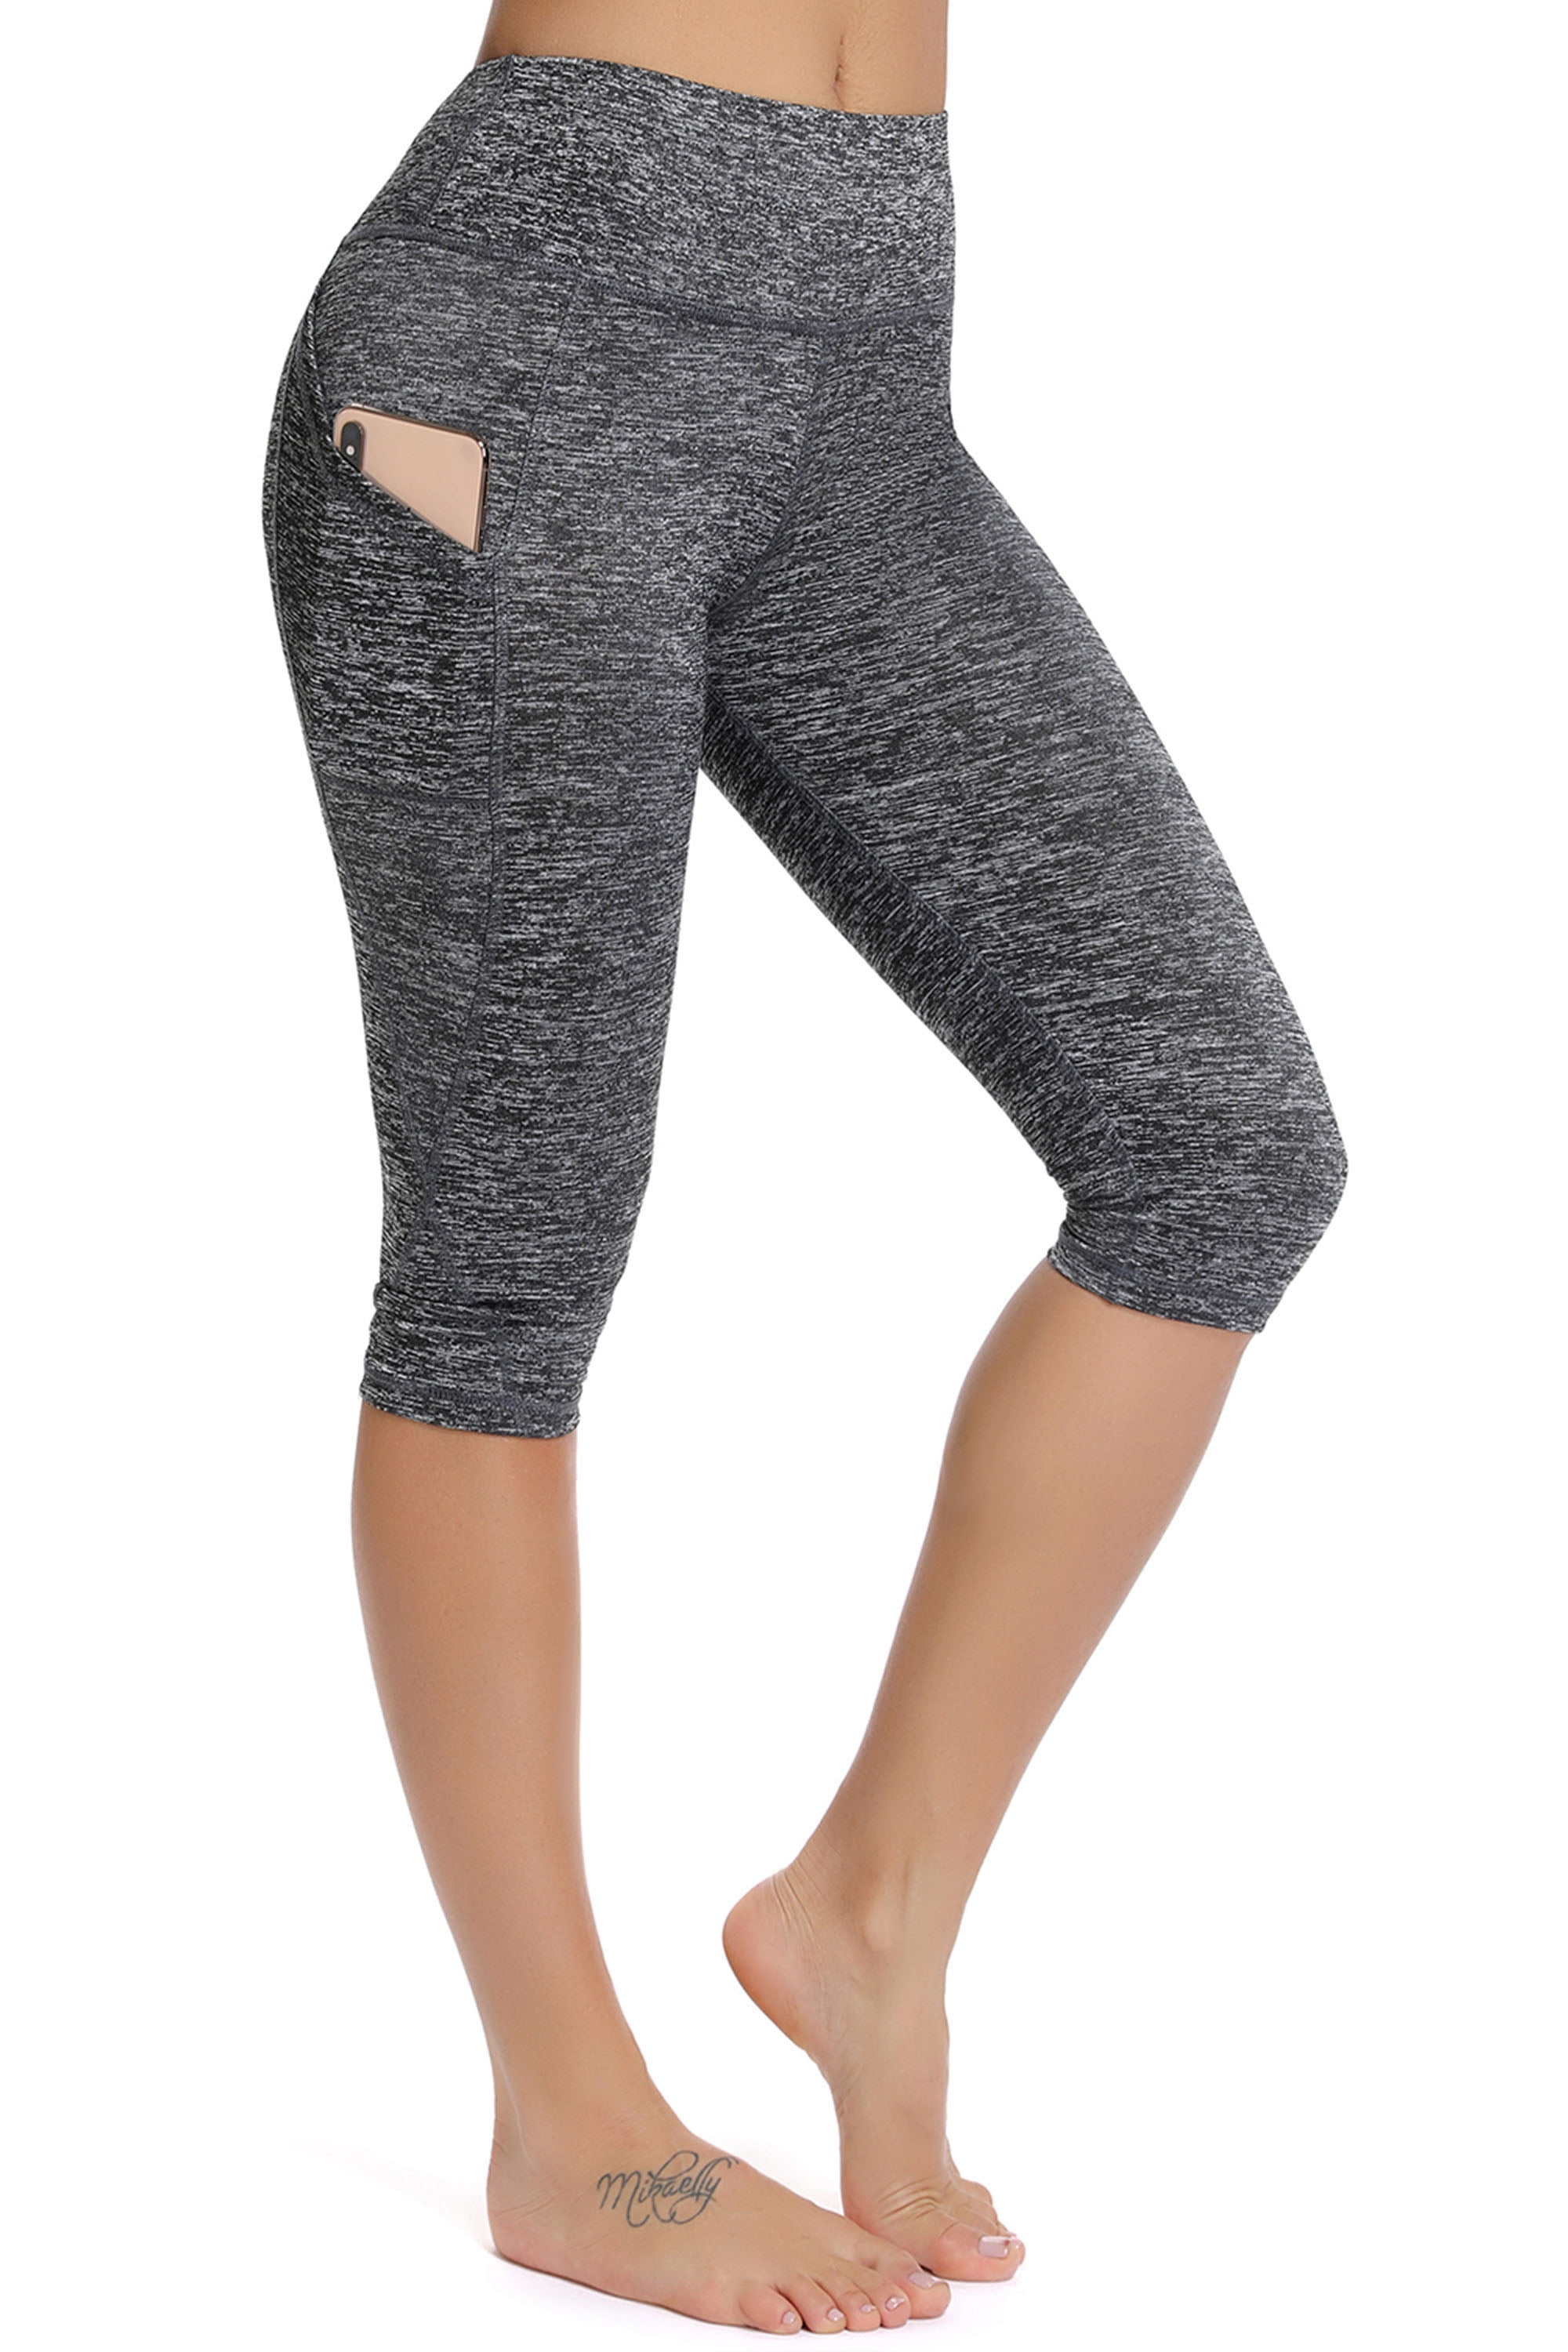 VIISHOW Women's High Waisted Tummy Control Capris Yoga Pants with Pockets Running Pants Workout Yoga Pants Leggings 